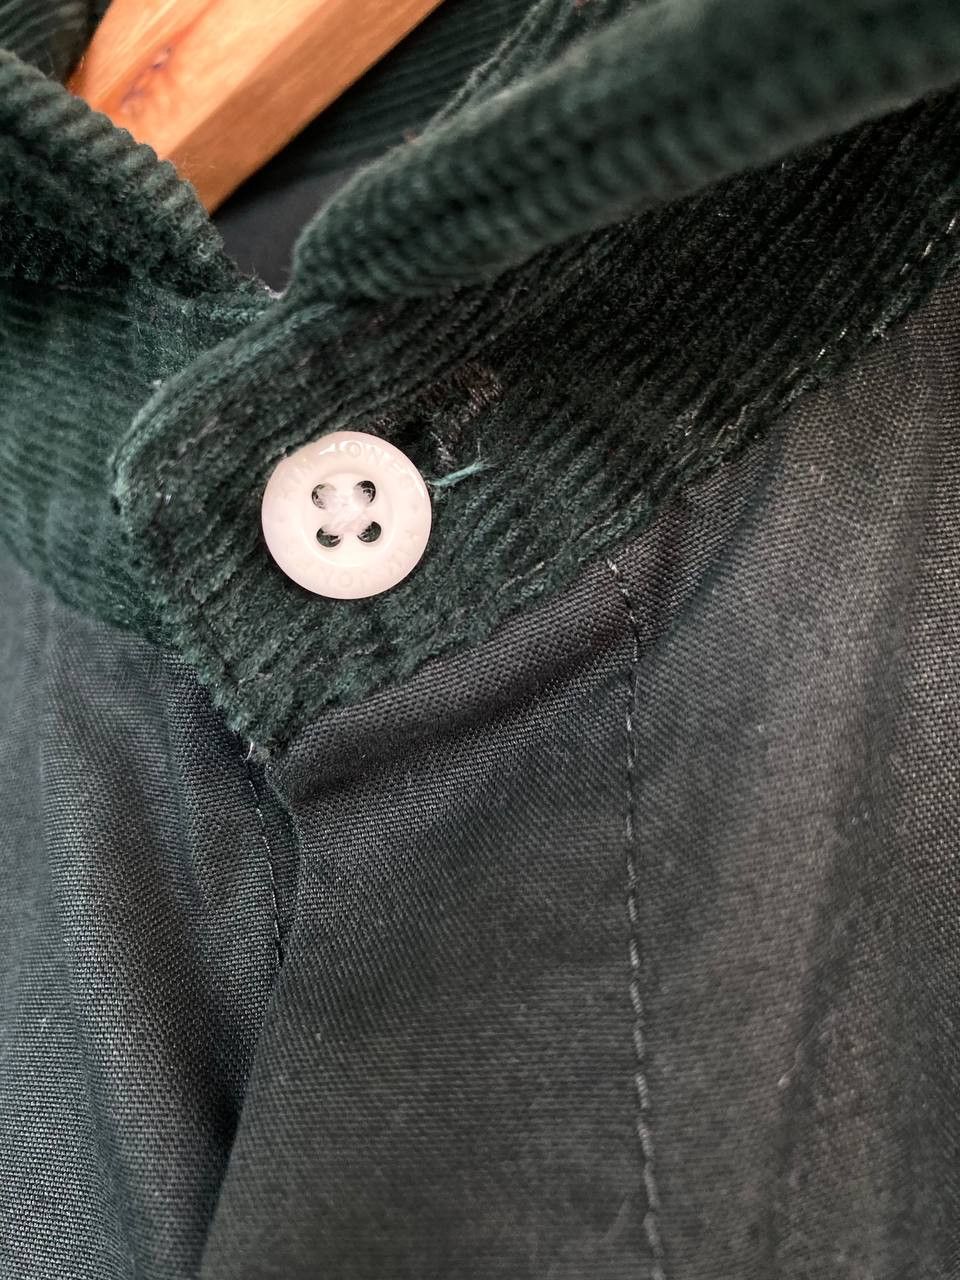 AW18 Kim Jones x GU Military Strap Buttoned Shirt - 5